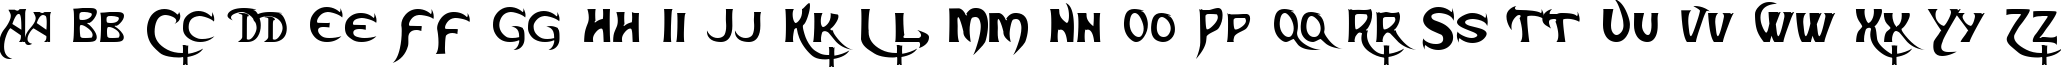 Пример написания английского алфавита шрифтом Skeksis Normal